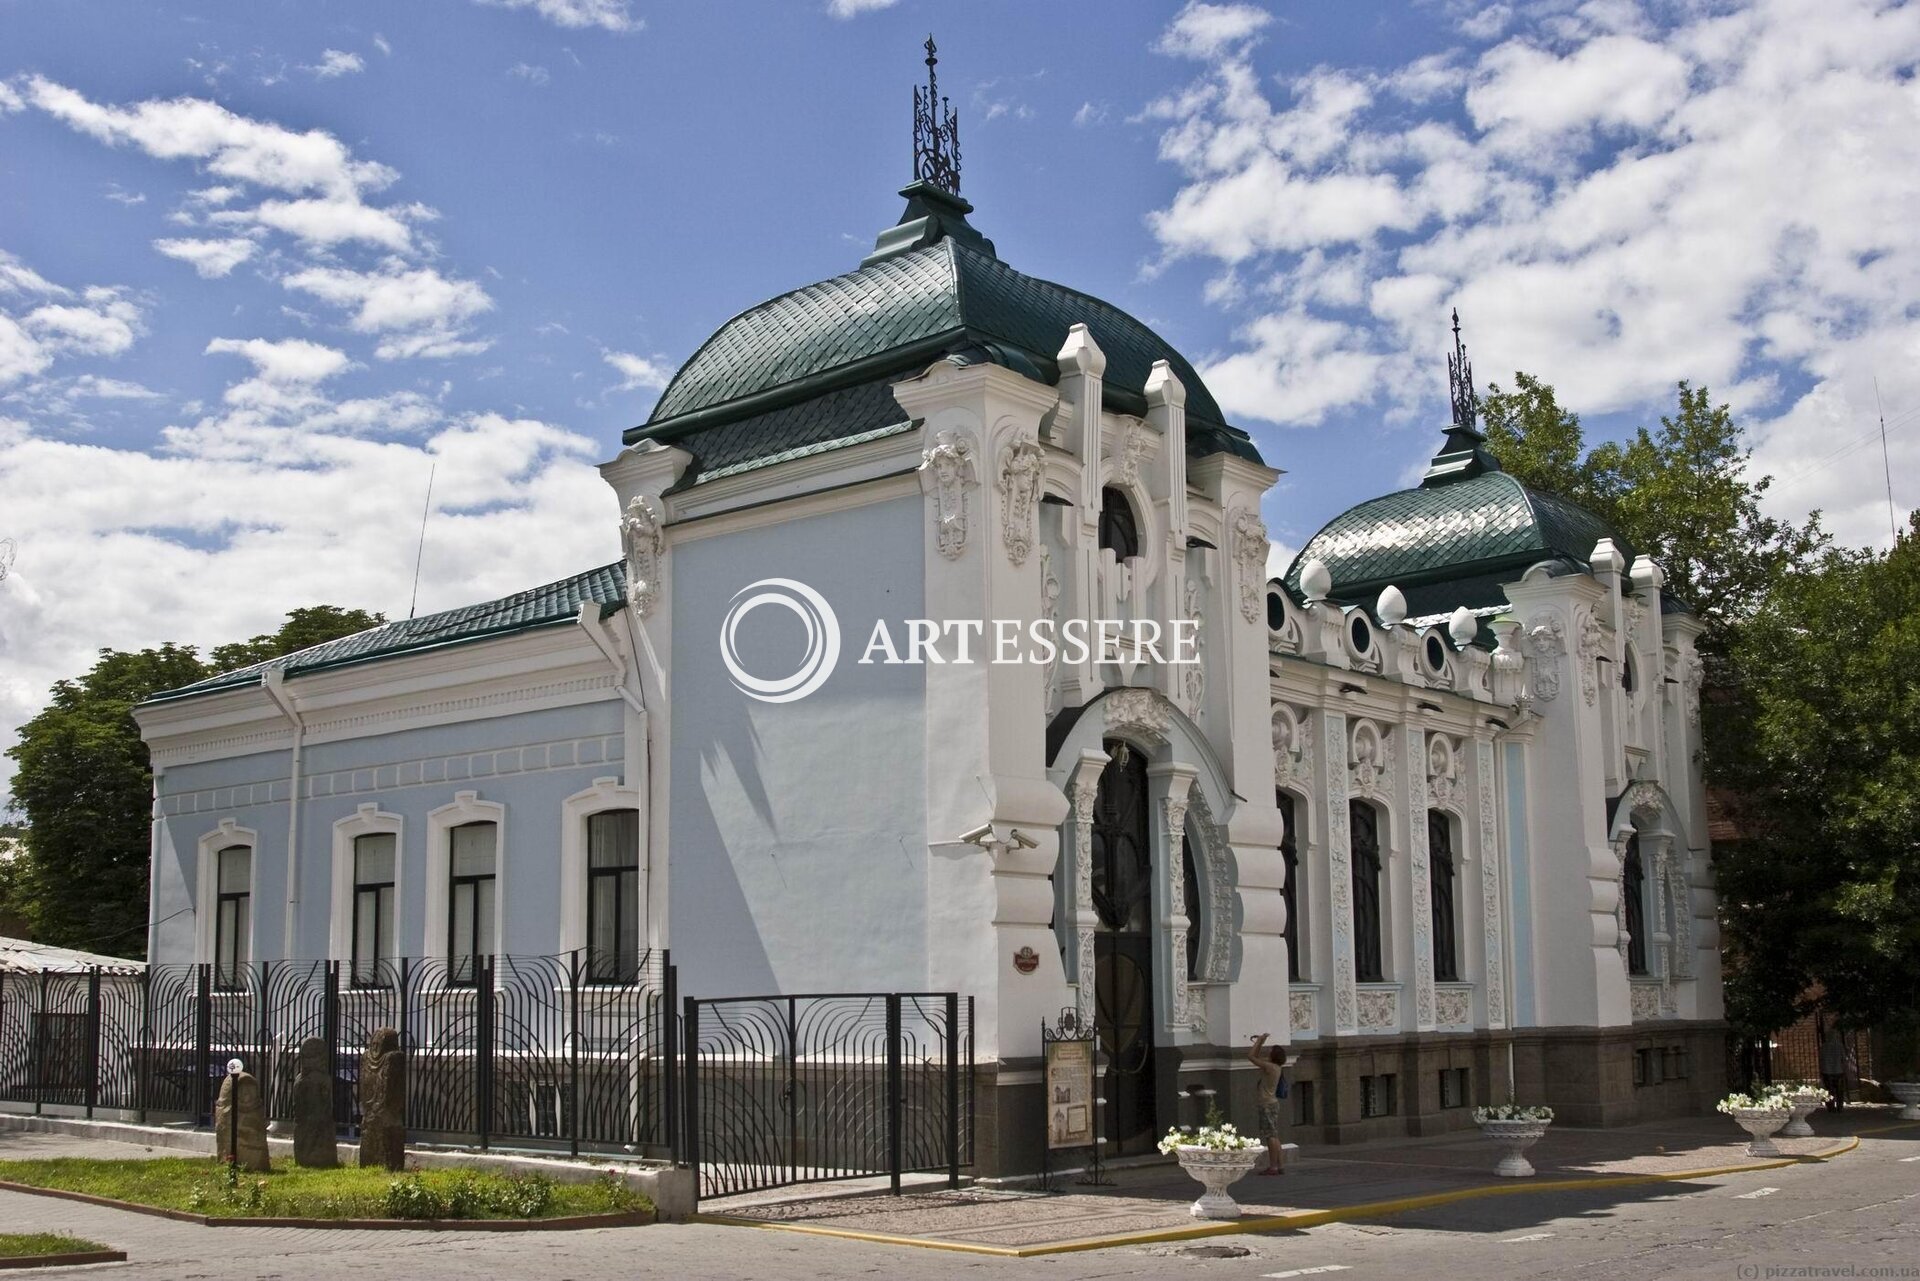 Kirovohrad Regional Museum